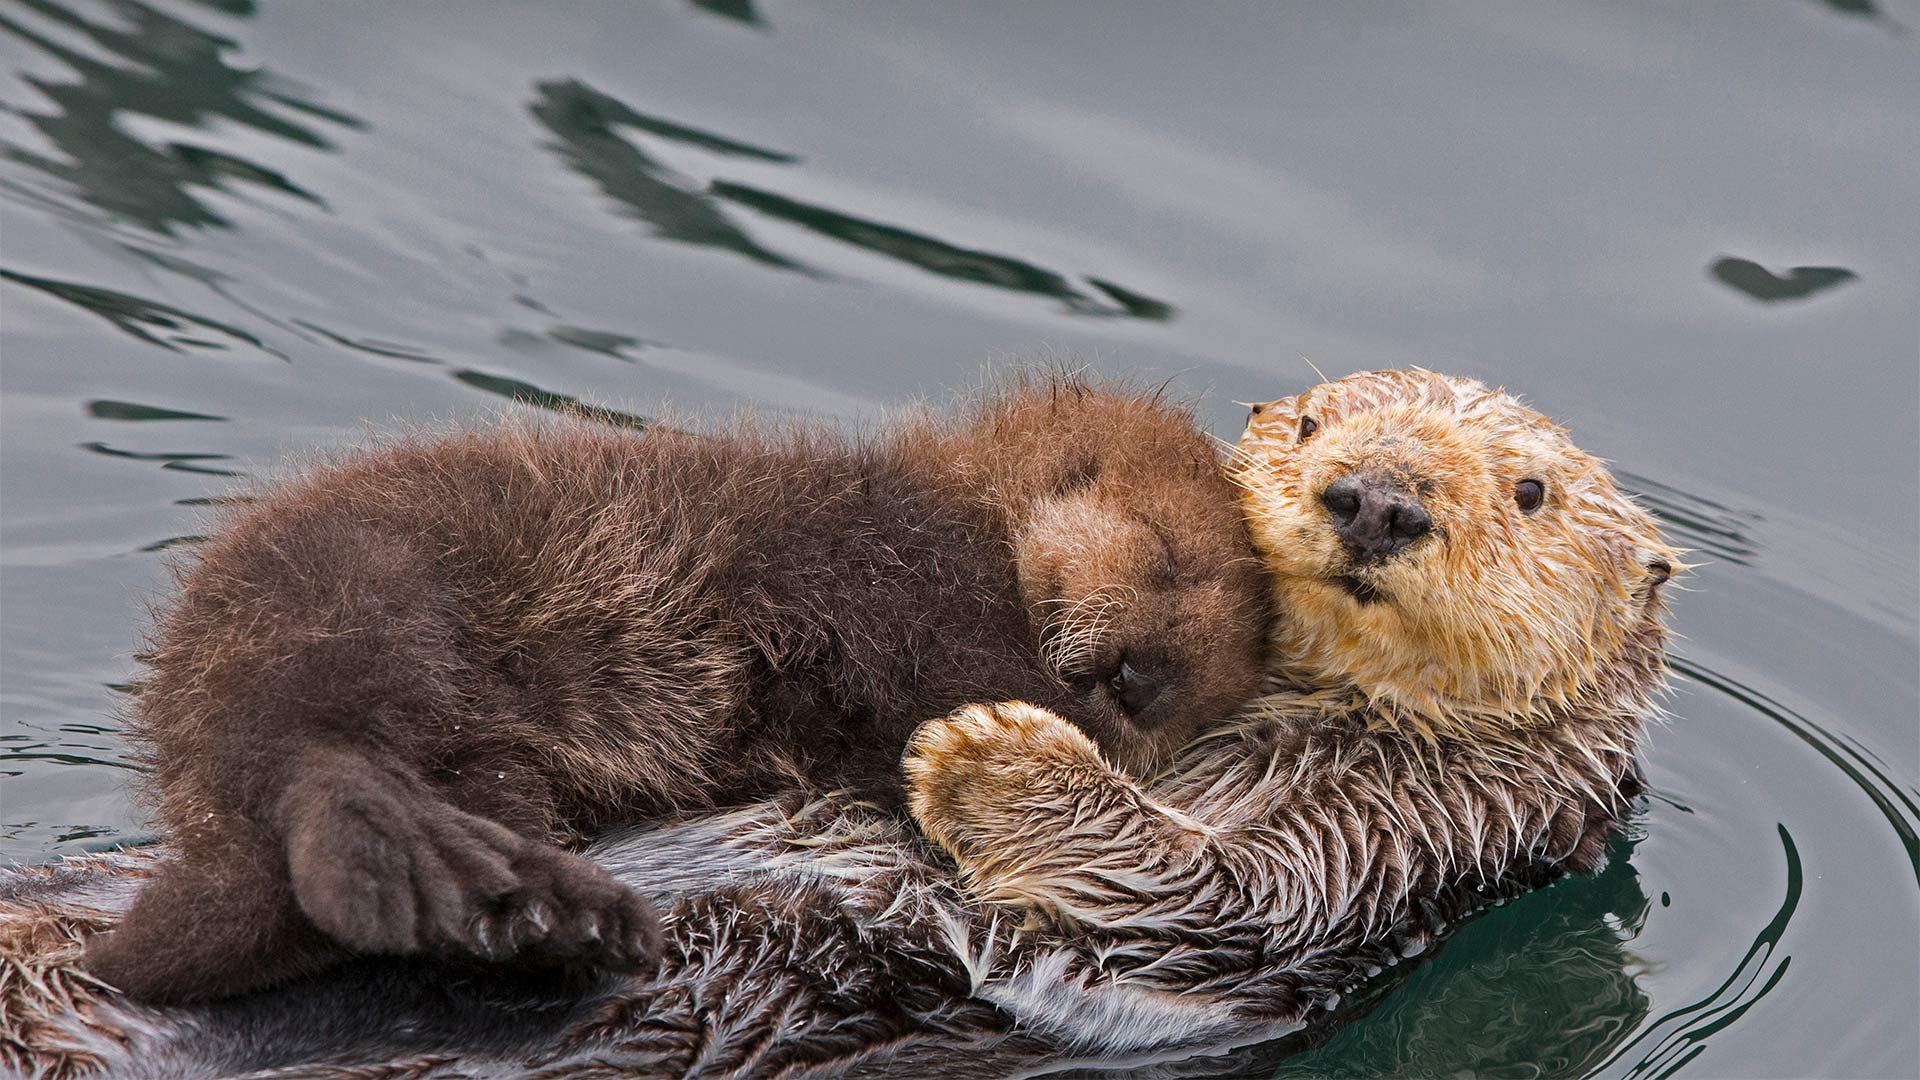 Sea otter mother and newborn pup, Monterey Bay, California - Suzi Eszterhas